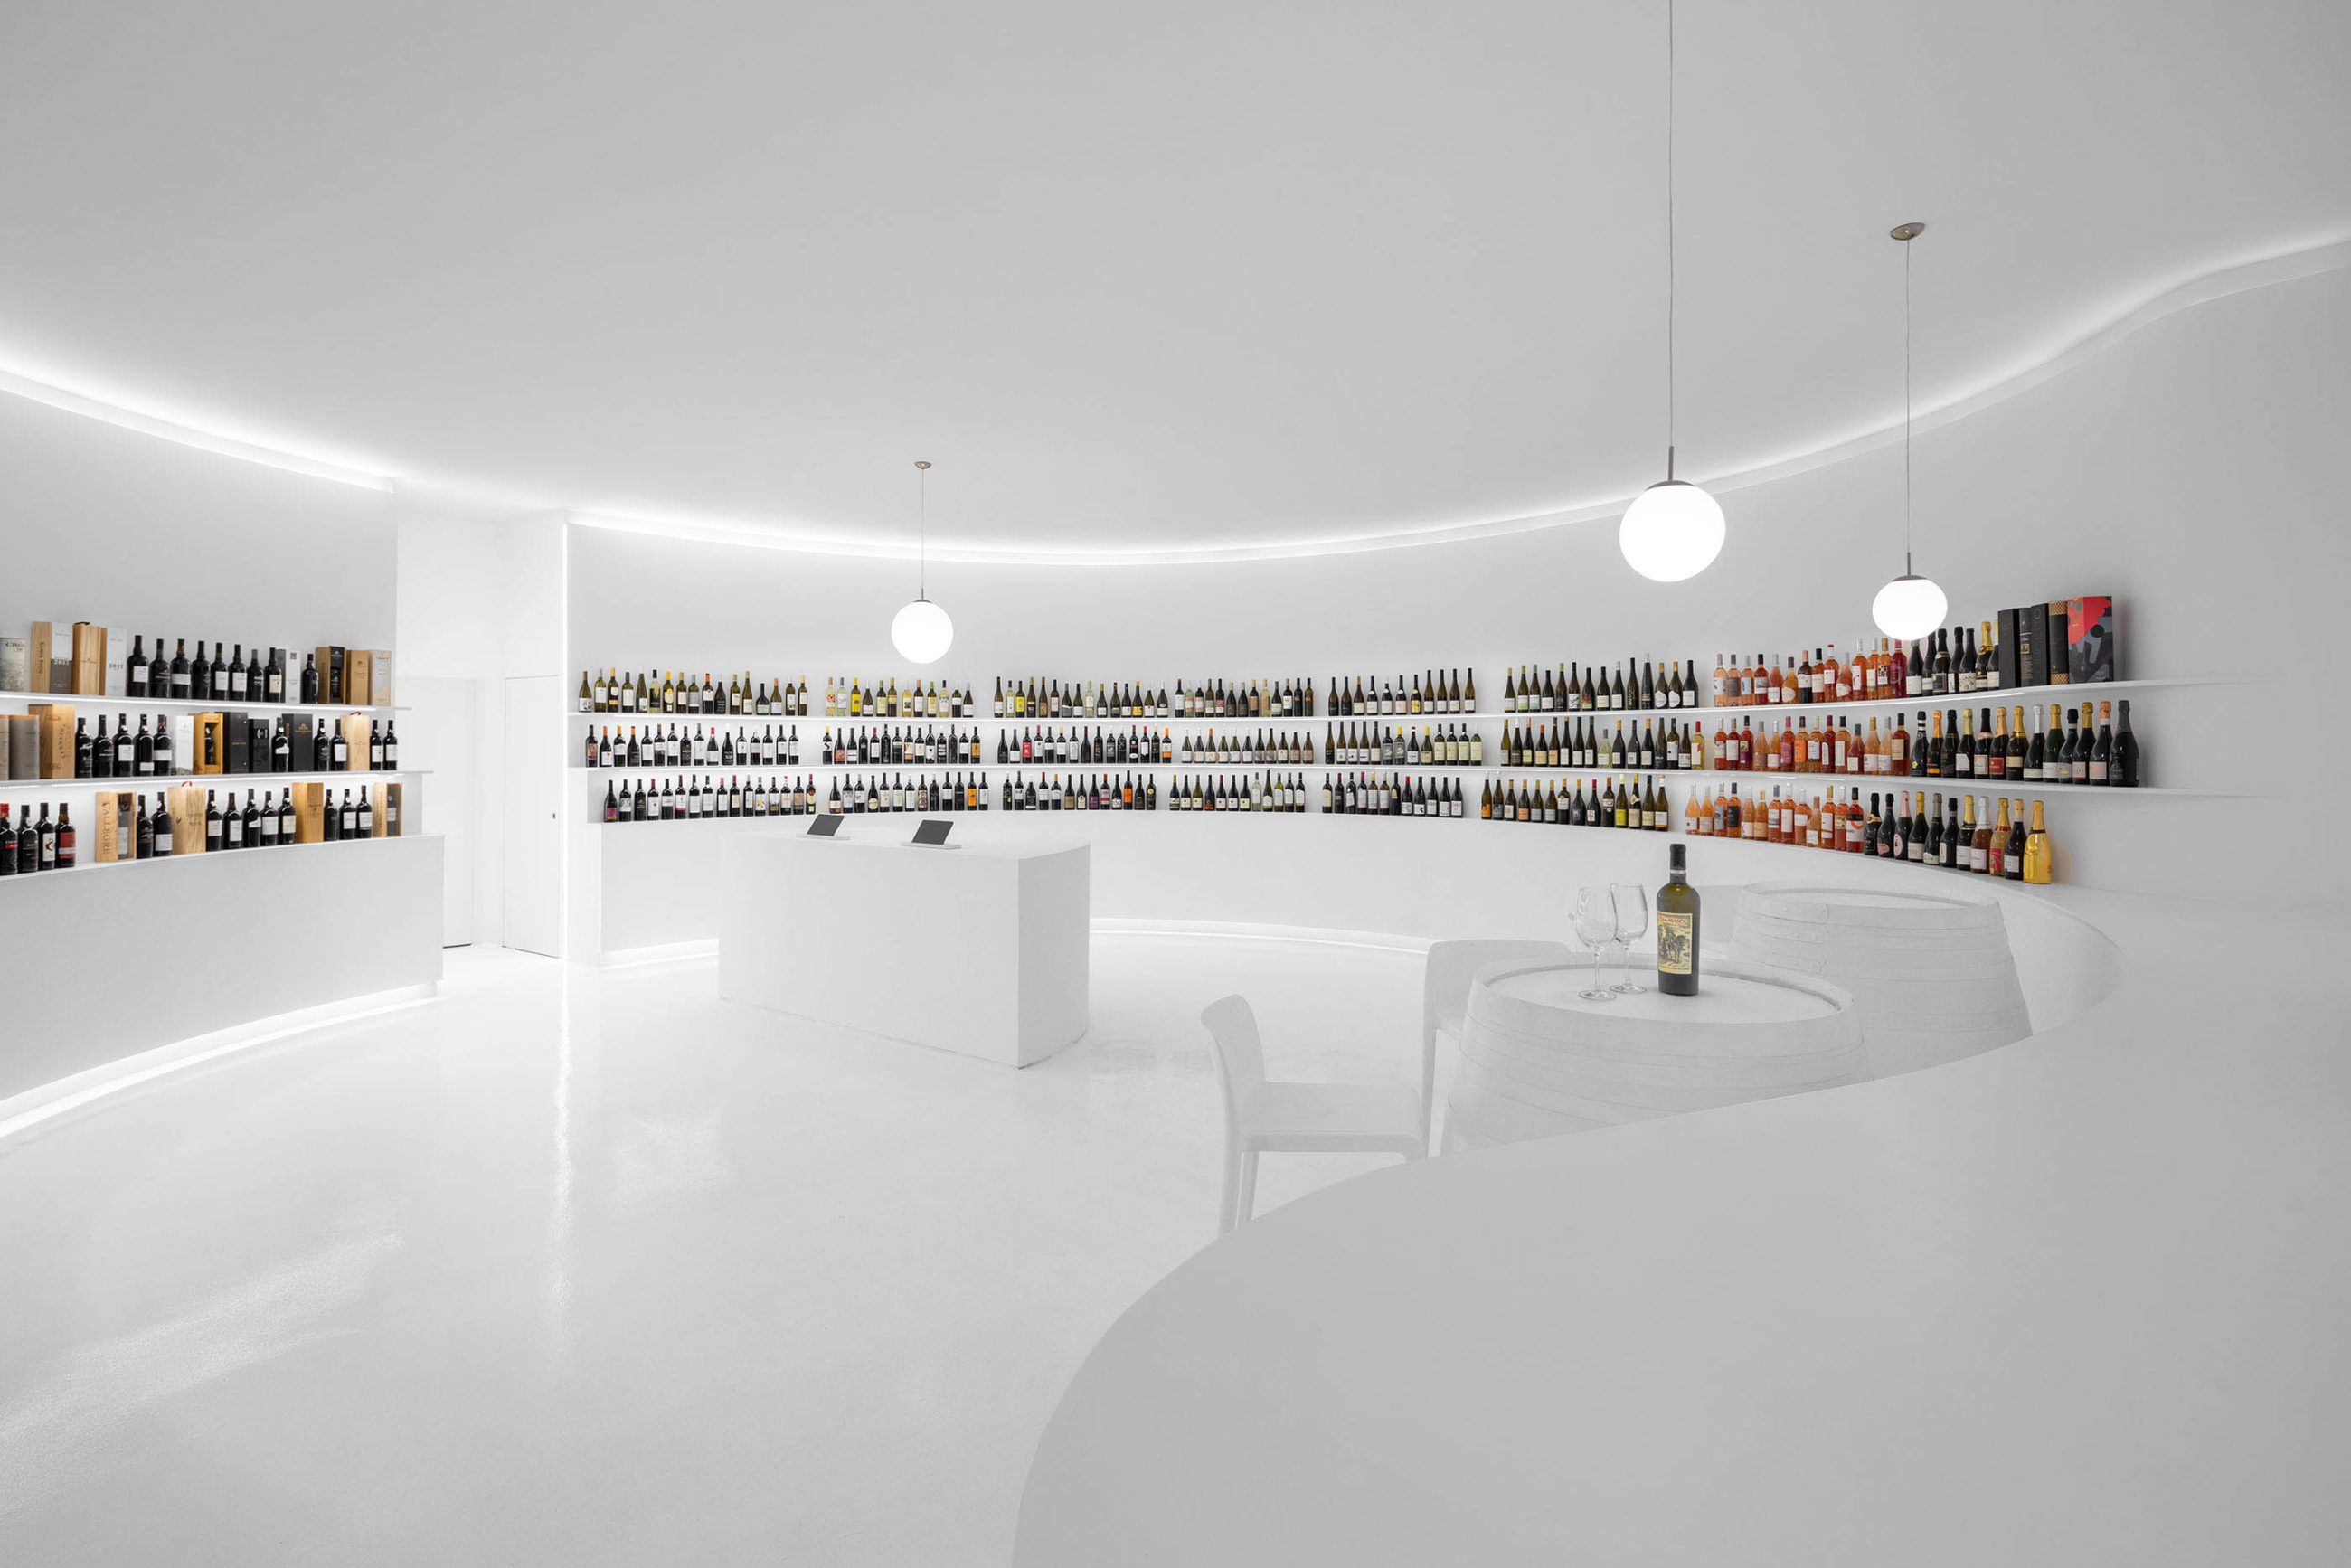 Portugal Vineyards Concept Store do atelier Porto Architects e fotografia arquitetura de ivo tavares studio